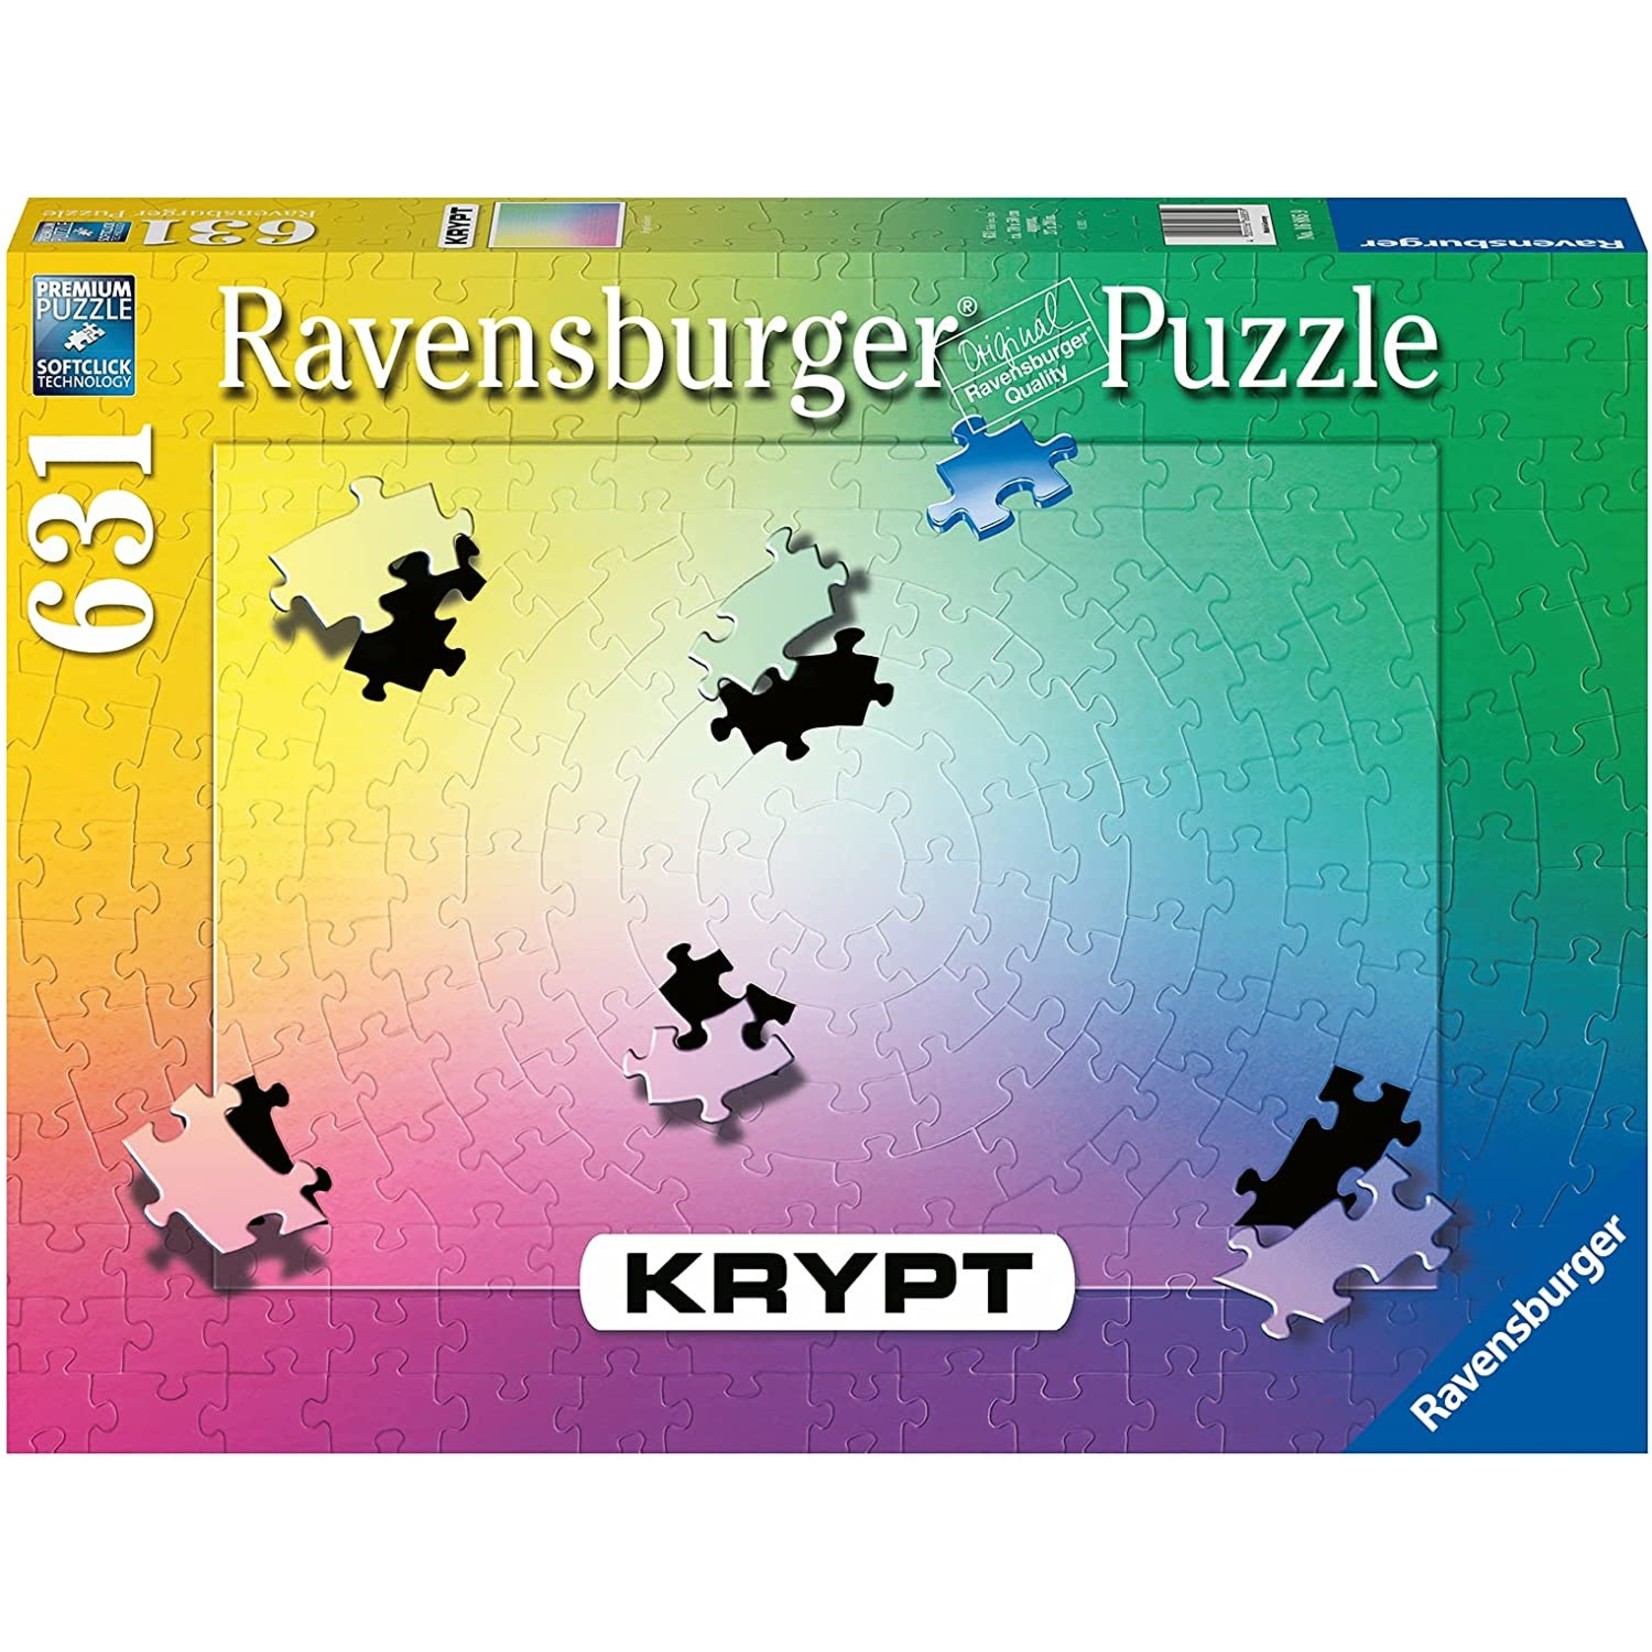 Ravensburger Krypt Gradient, 631-Piece Jigsaw Puzzle